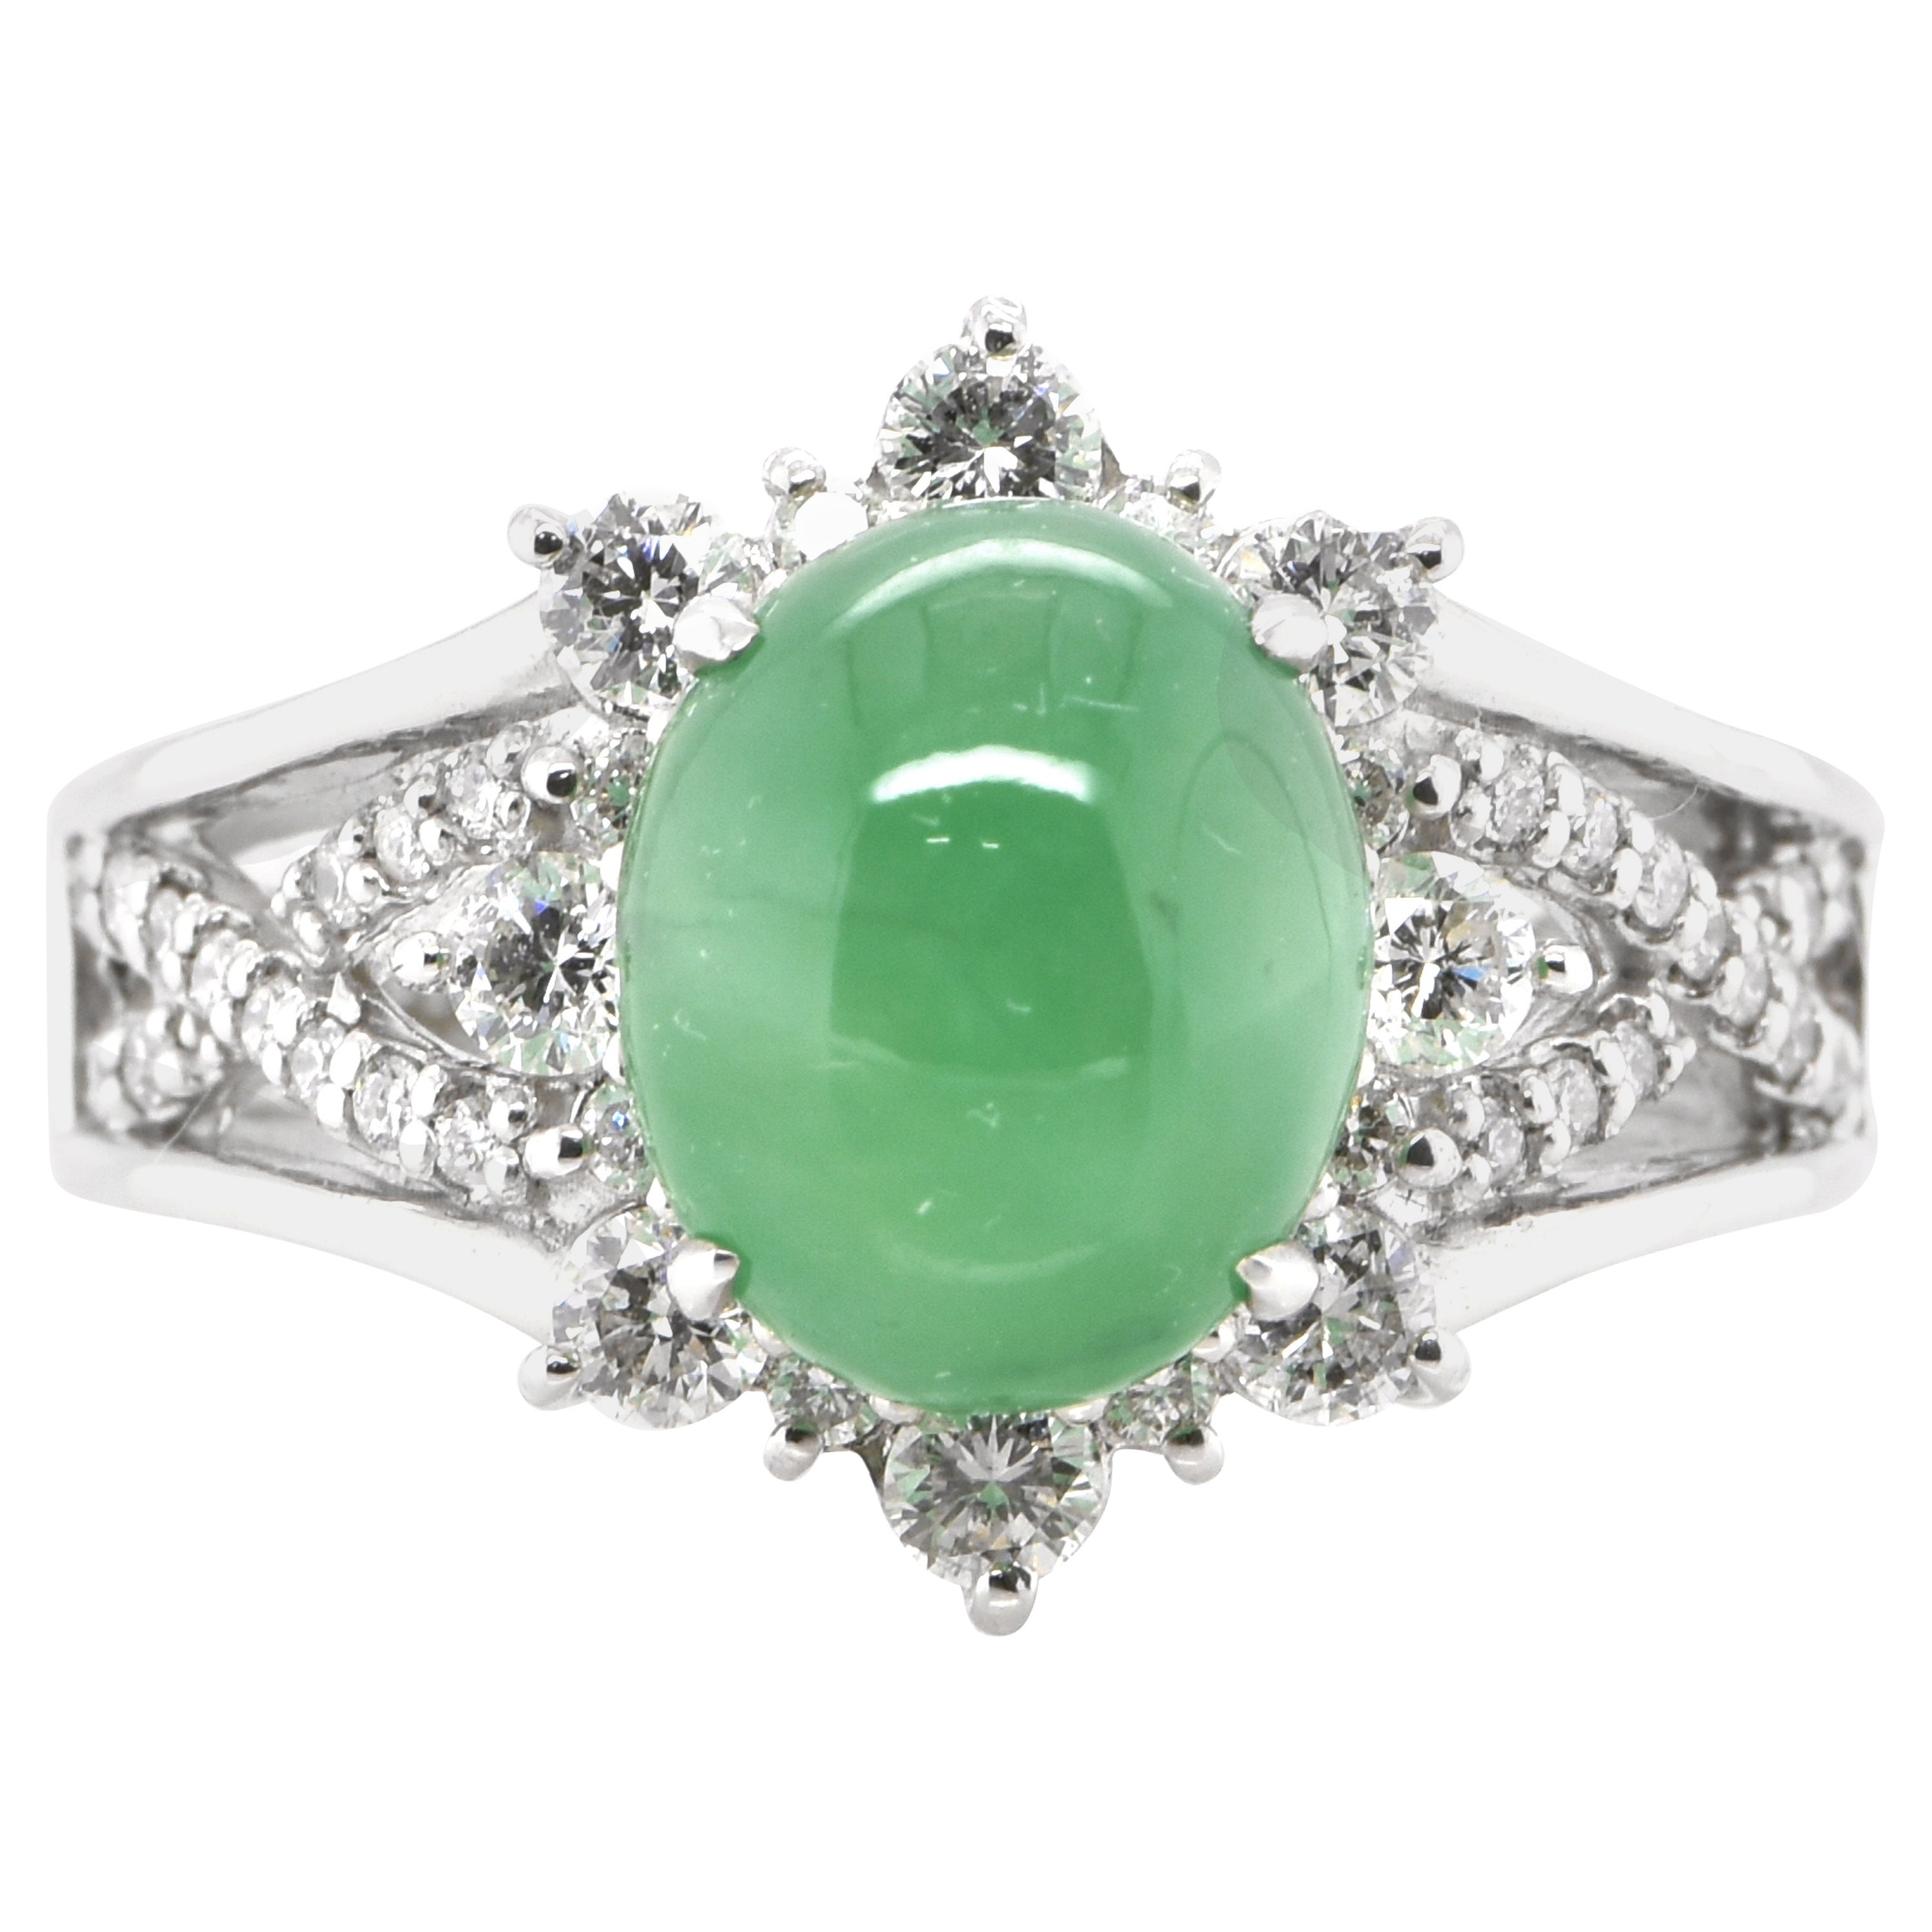 4.10 Carat Natural Apple Green Jadeite and Diamond Cocktail Ring Set in Platinum